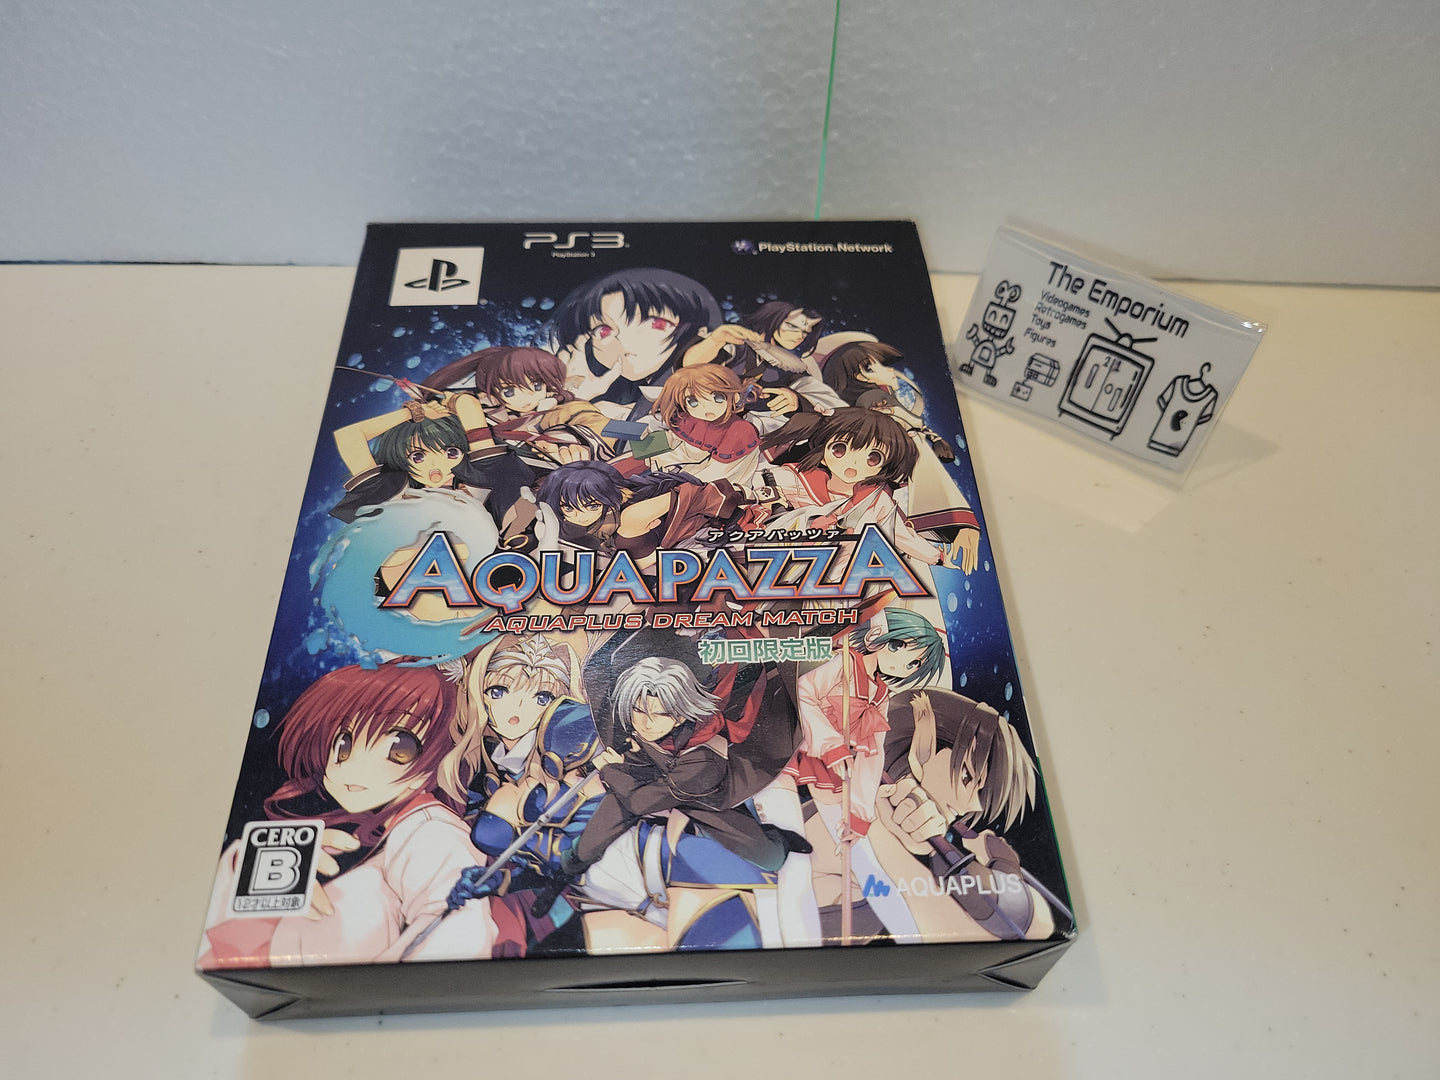 Aqua Pazza: Aquaplus Dream Match [Limited Edition] - Sony PS3 Playstation 3